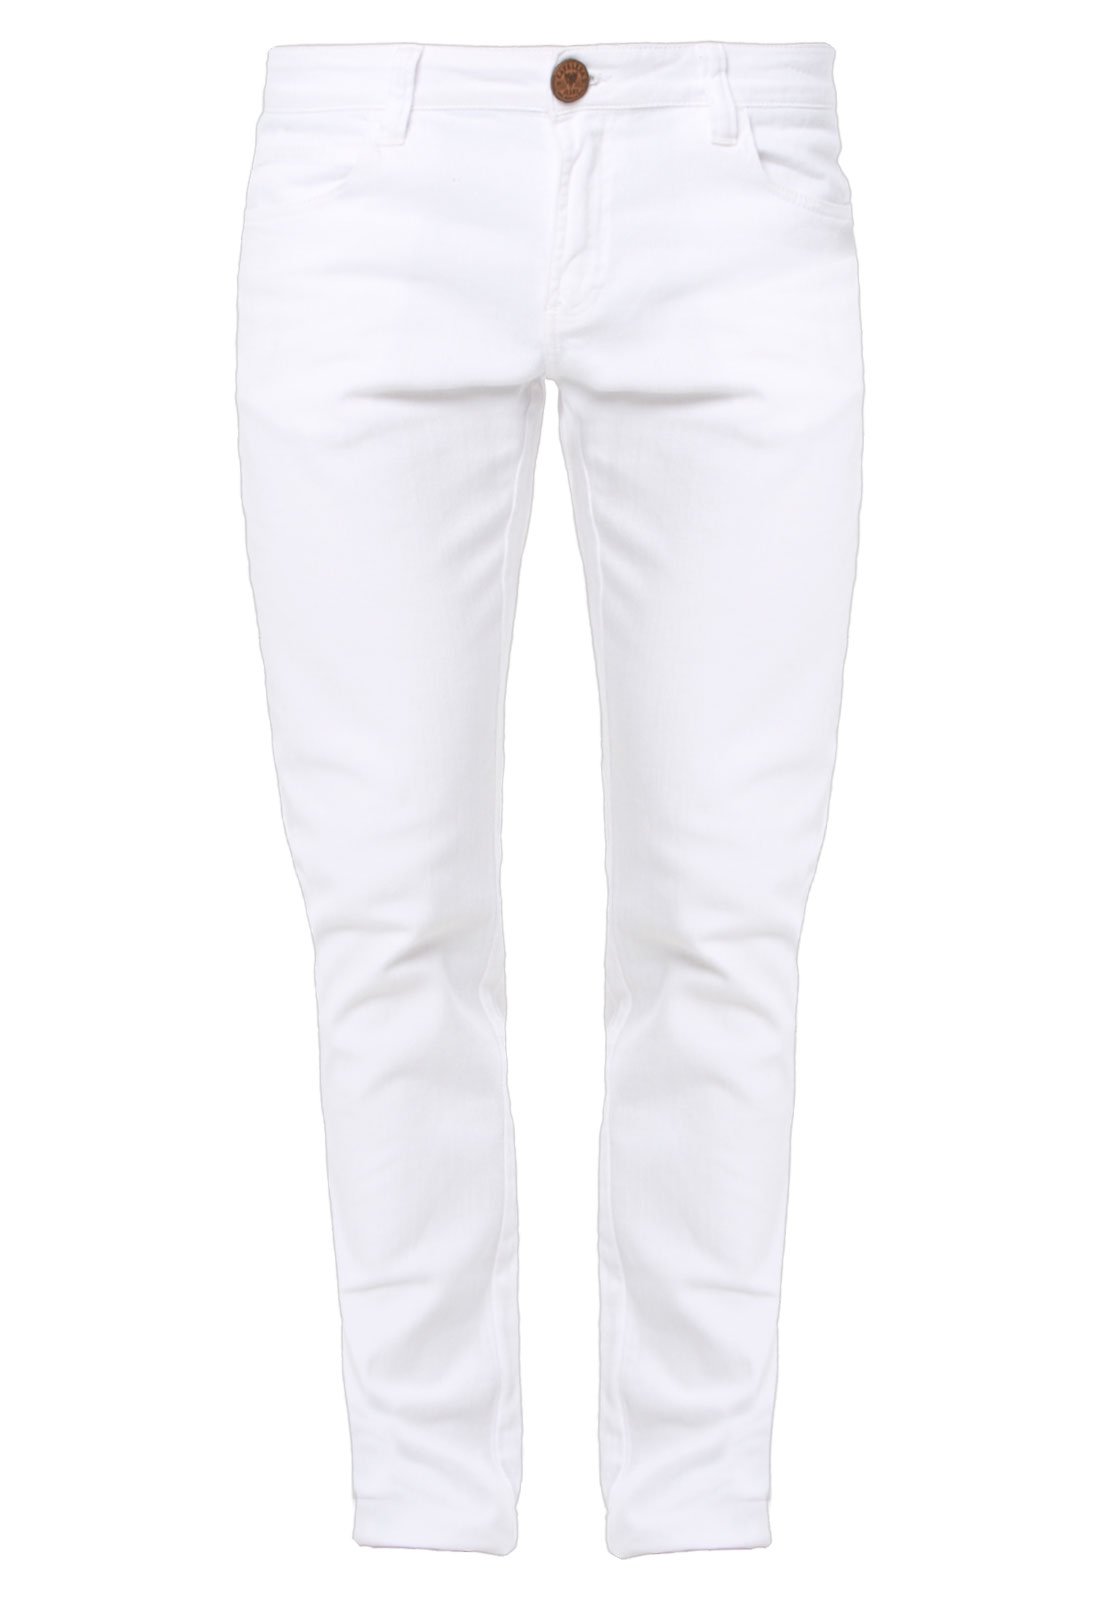 calça masculina branca sarja